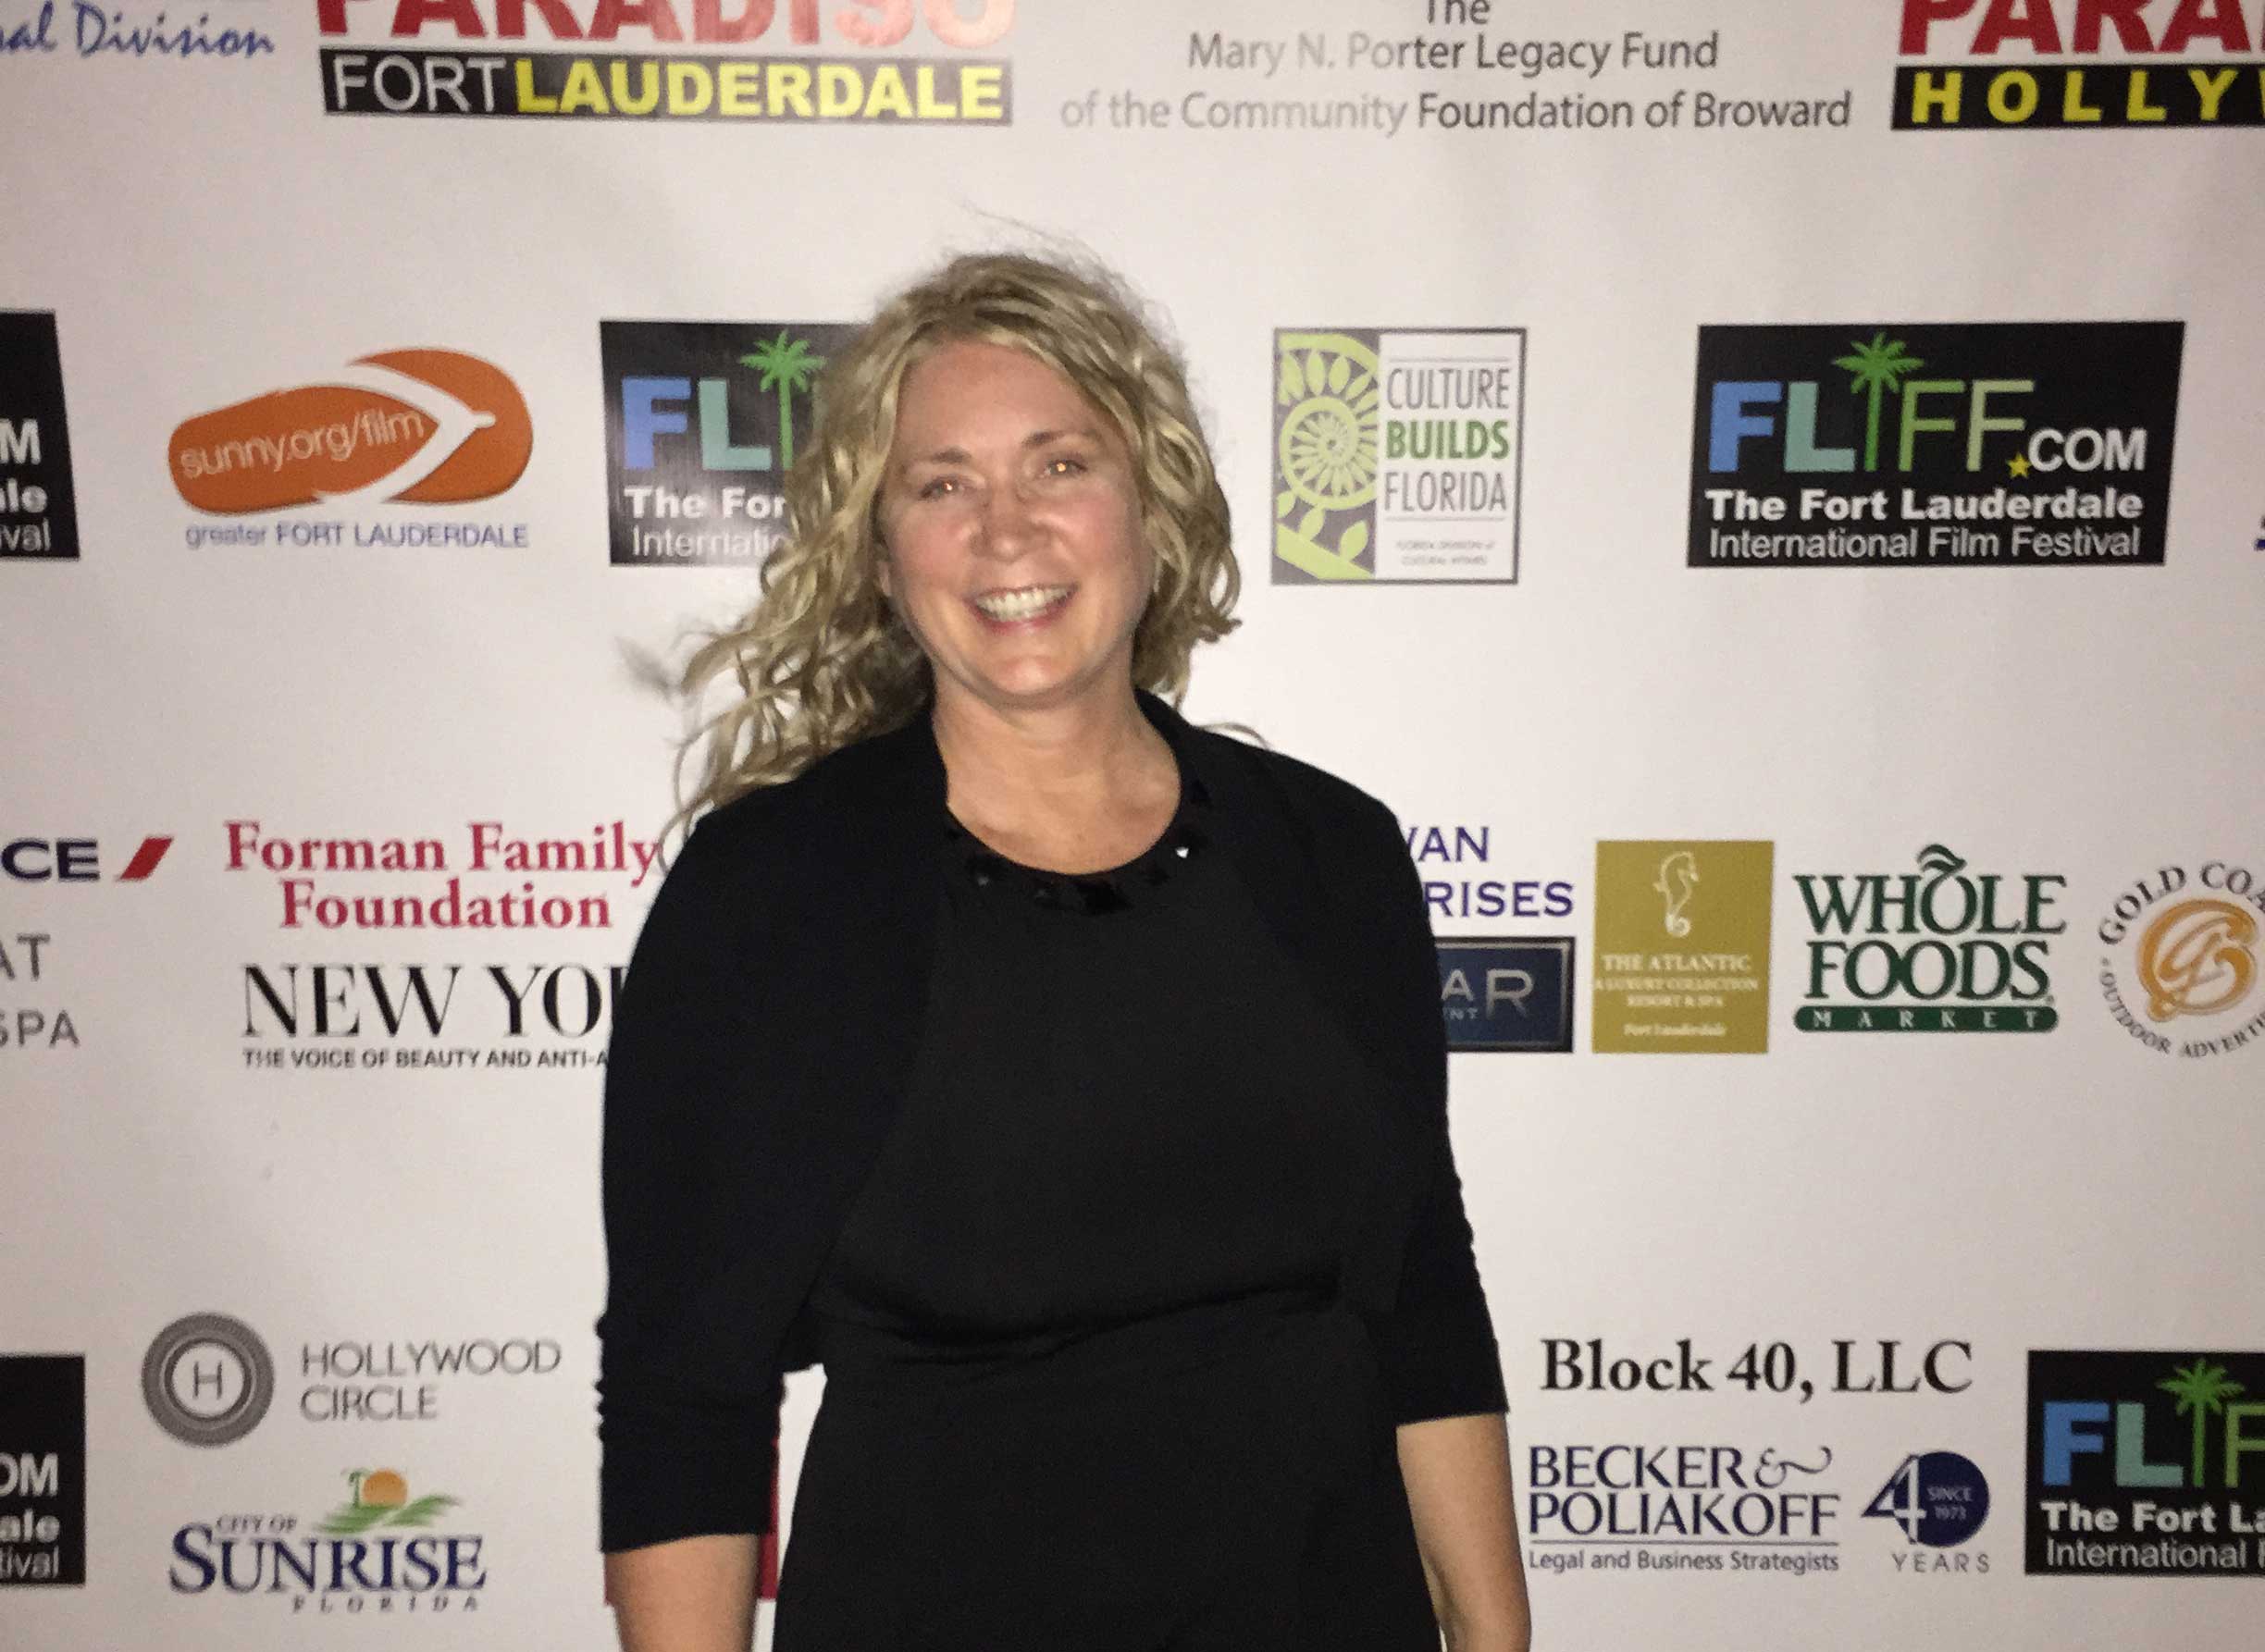 Fort Lauderdale International Film Festival April 9, 2014 Gym Brats